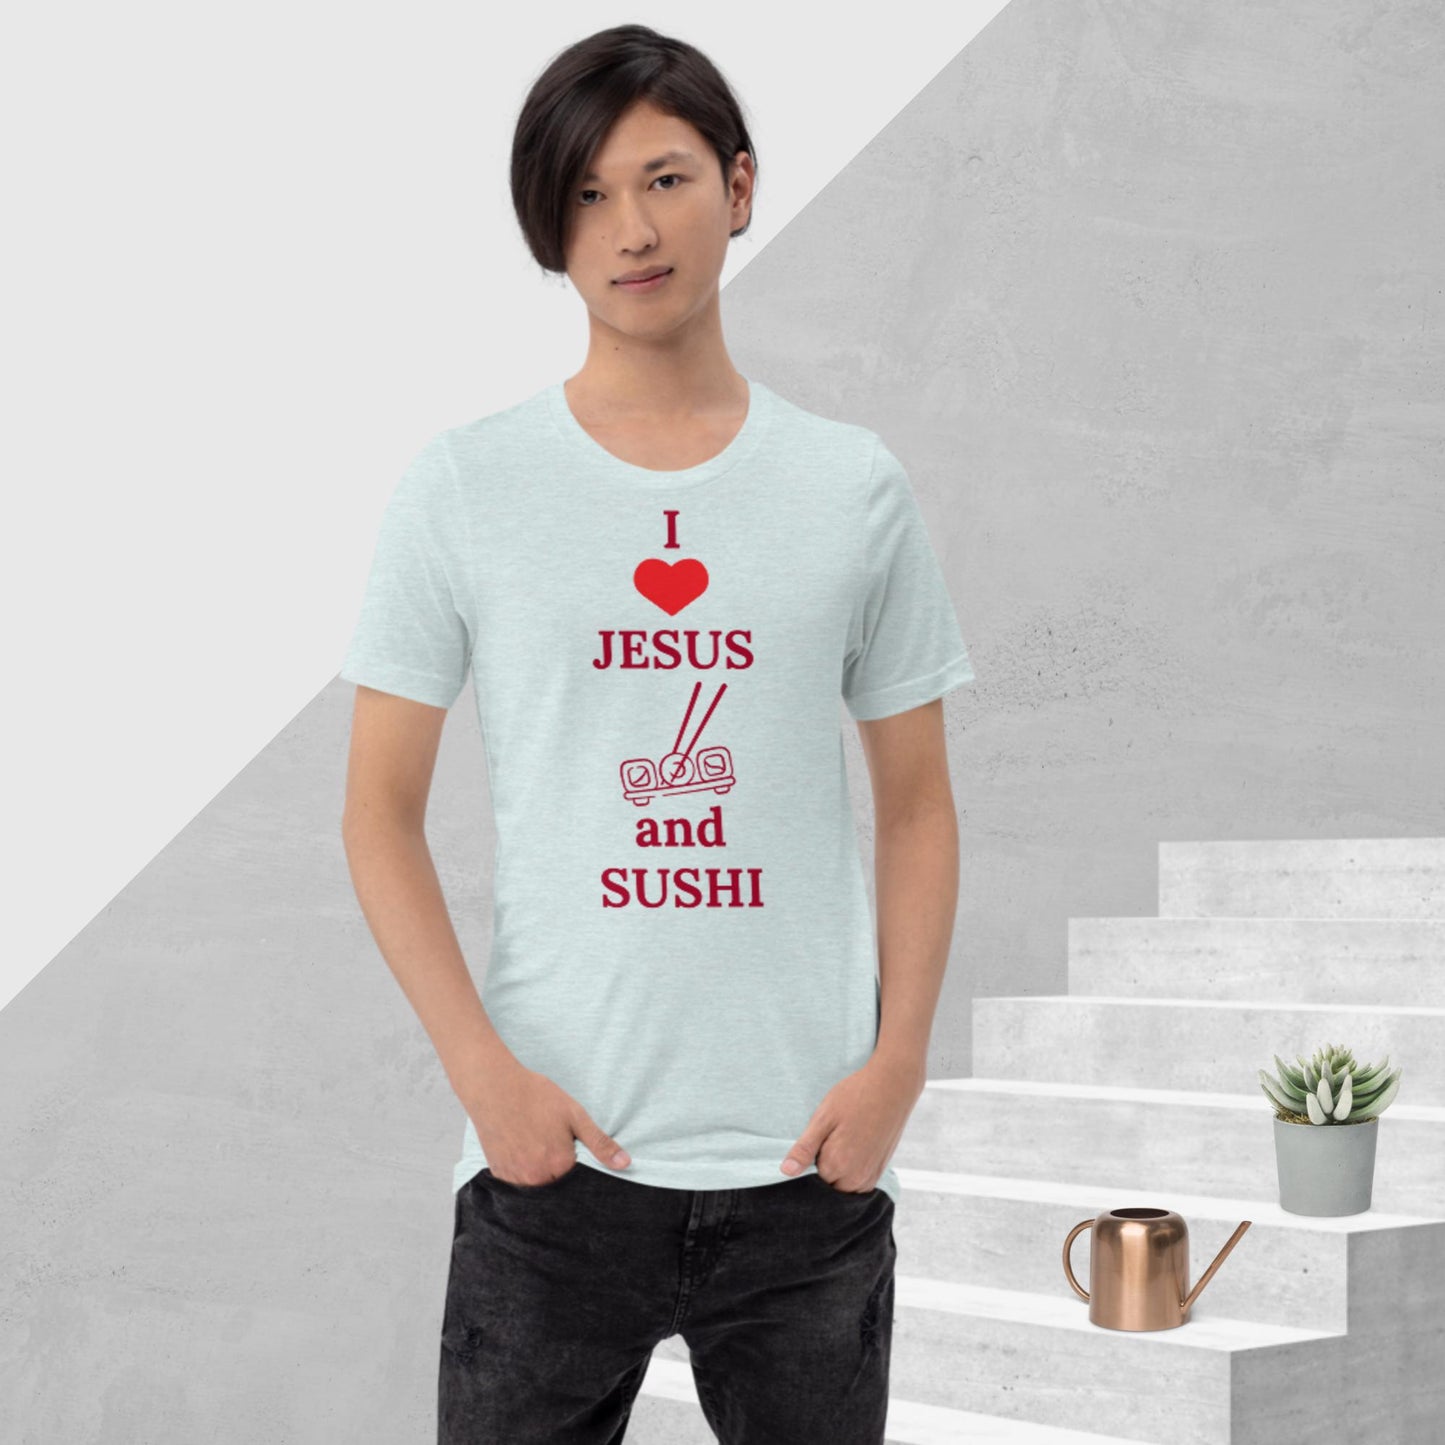 I love Jesus and Sushi T-shirt